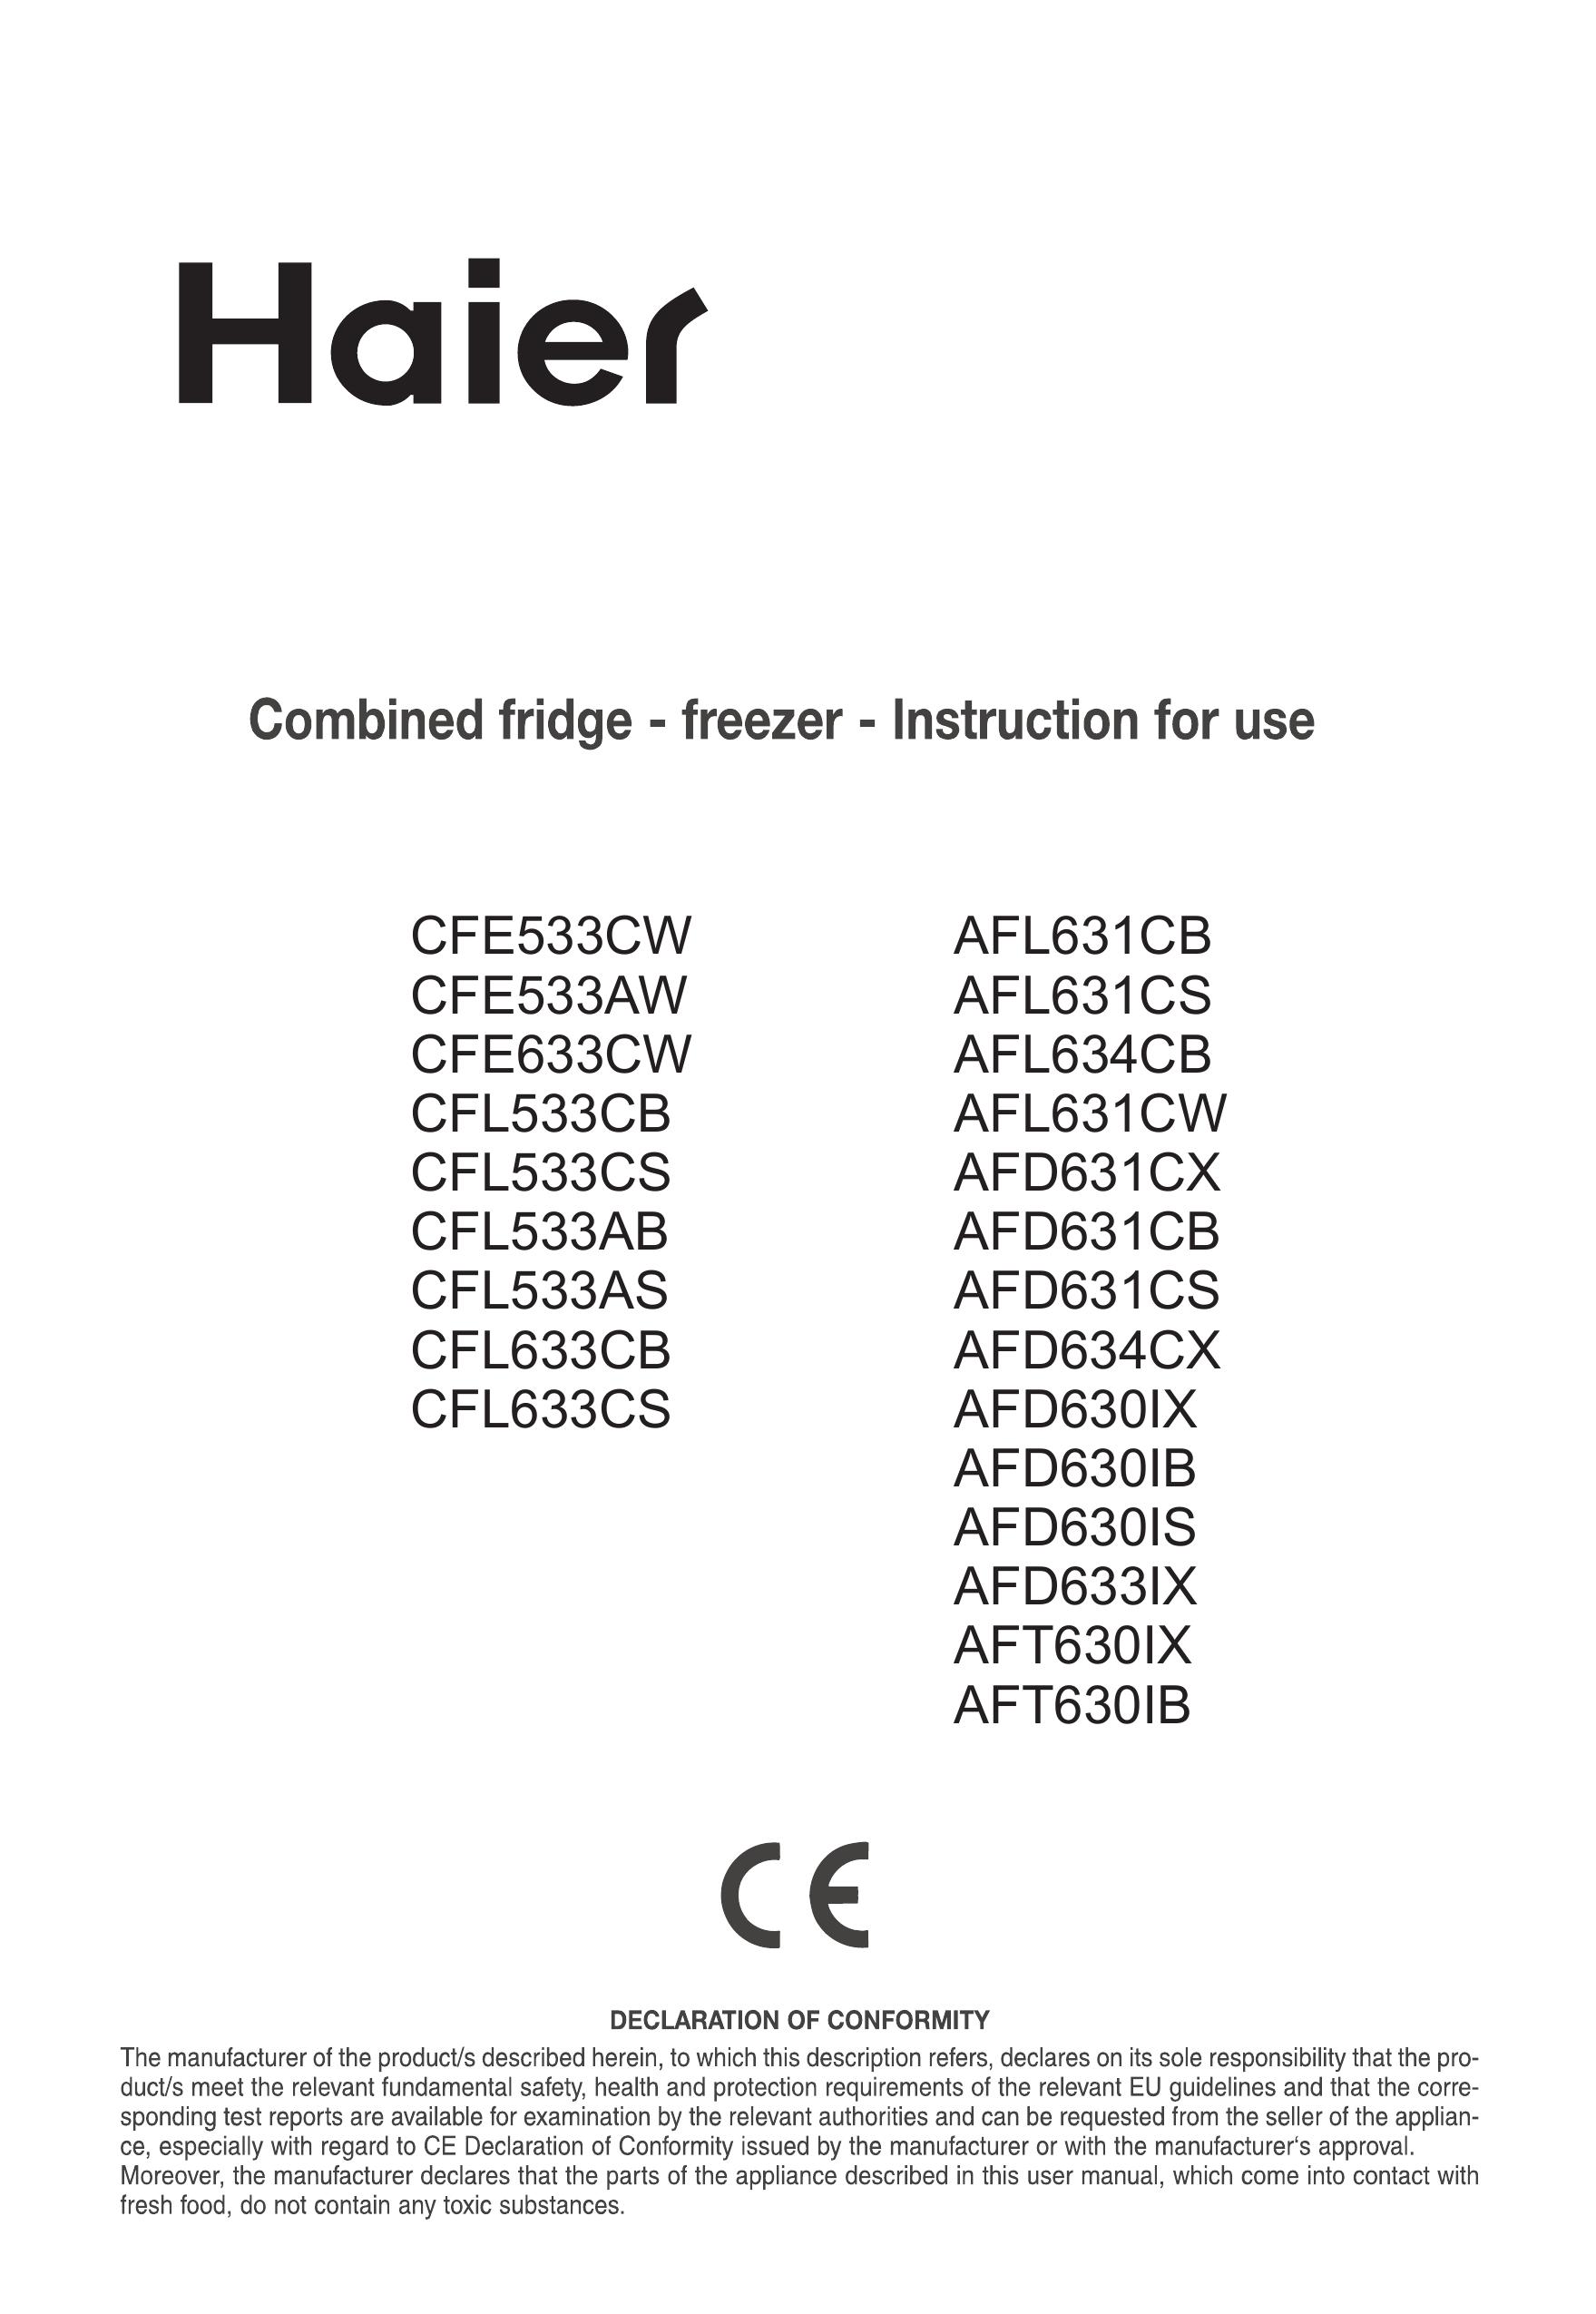 Haier AFT630IB Refrigerator User Manual